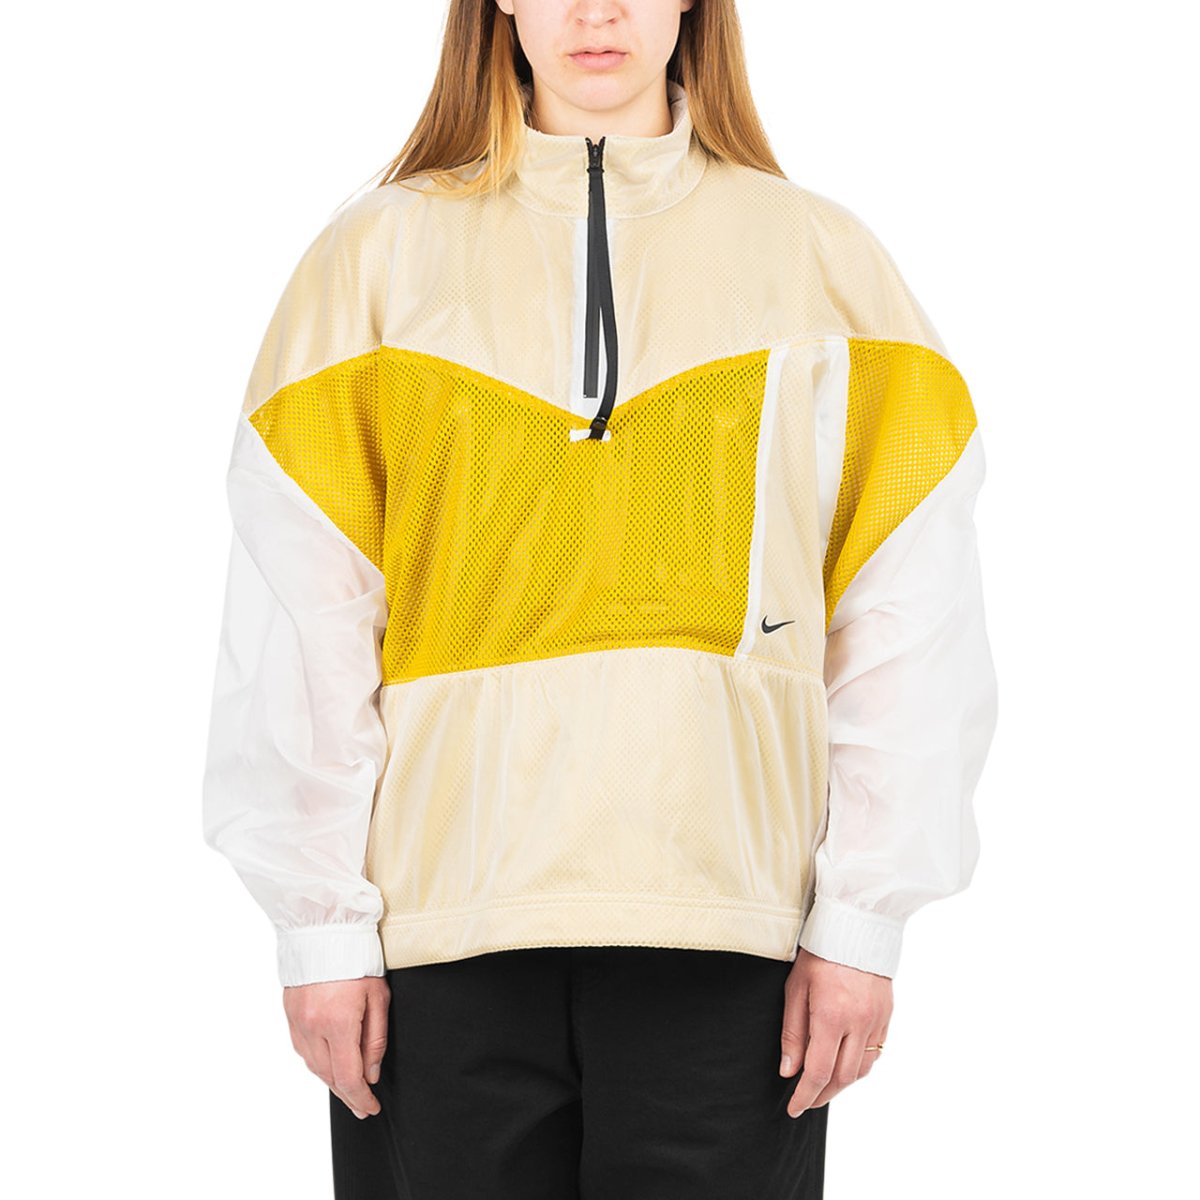 Image of Nike WMNS Tech Pack Mesh Jacket (White / Mustard)